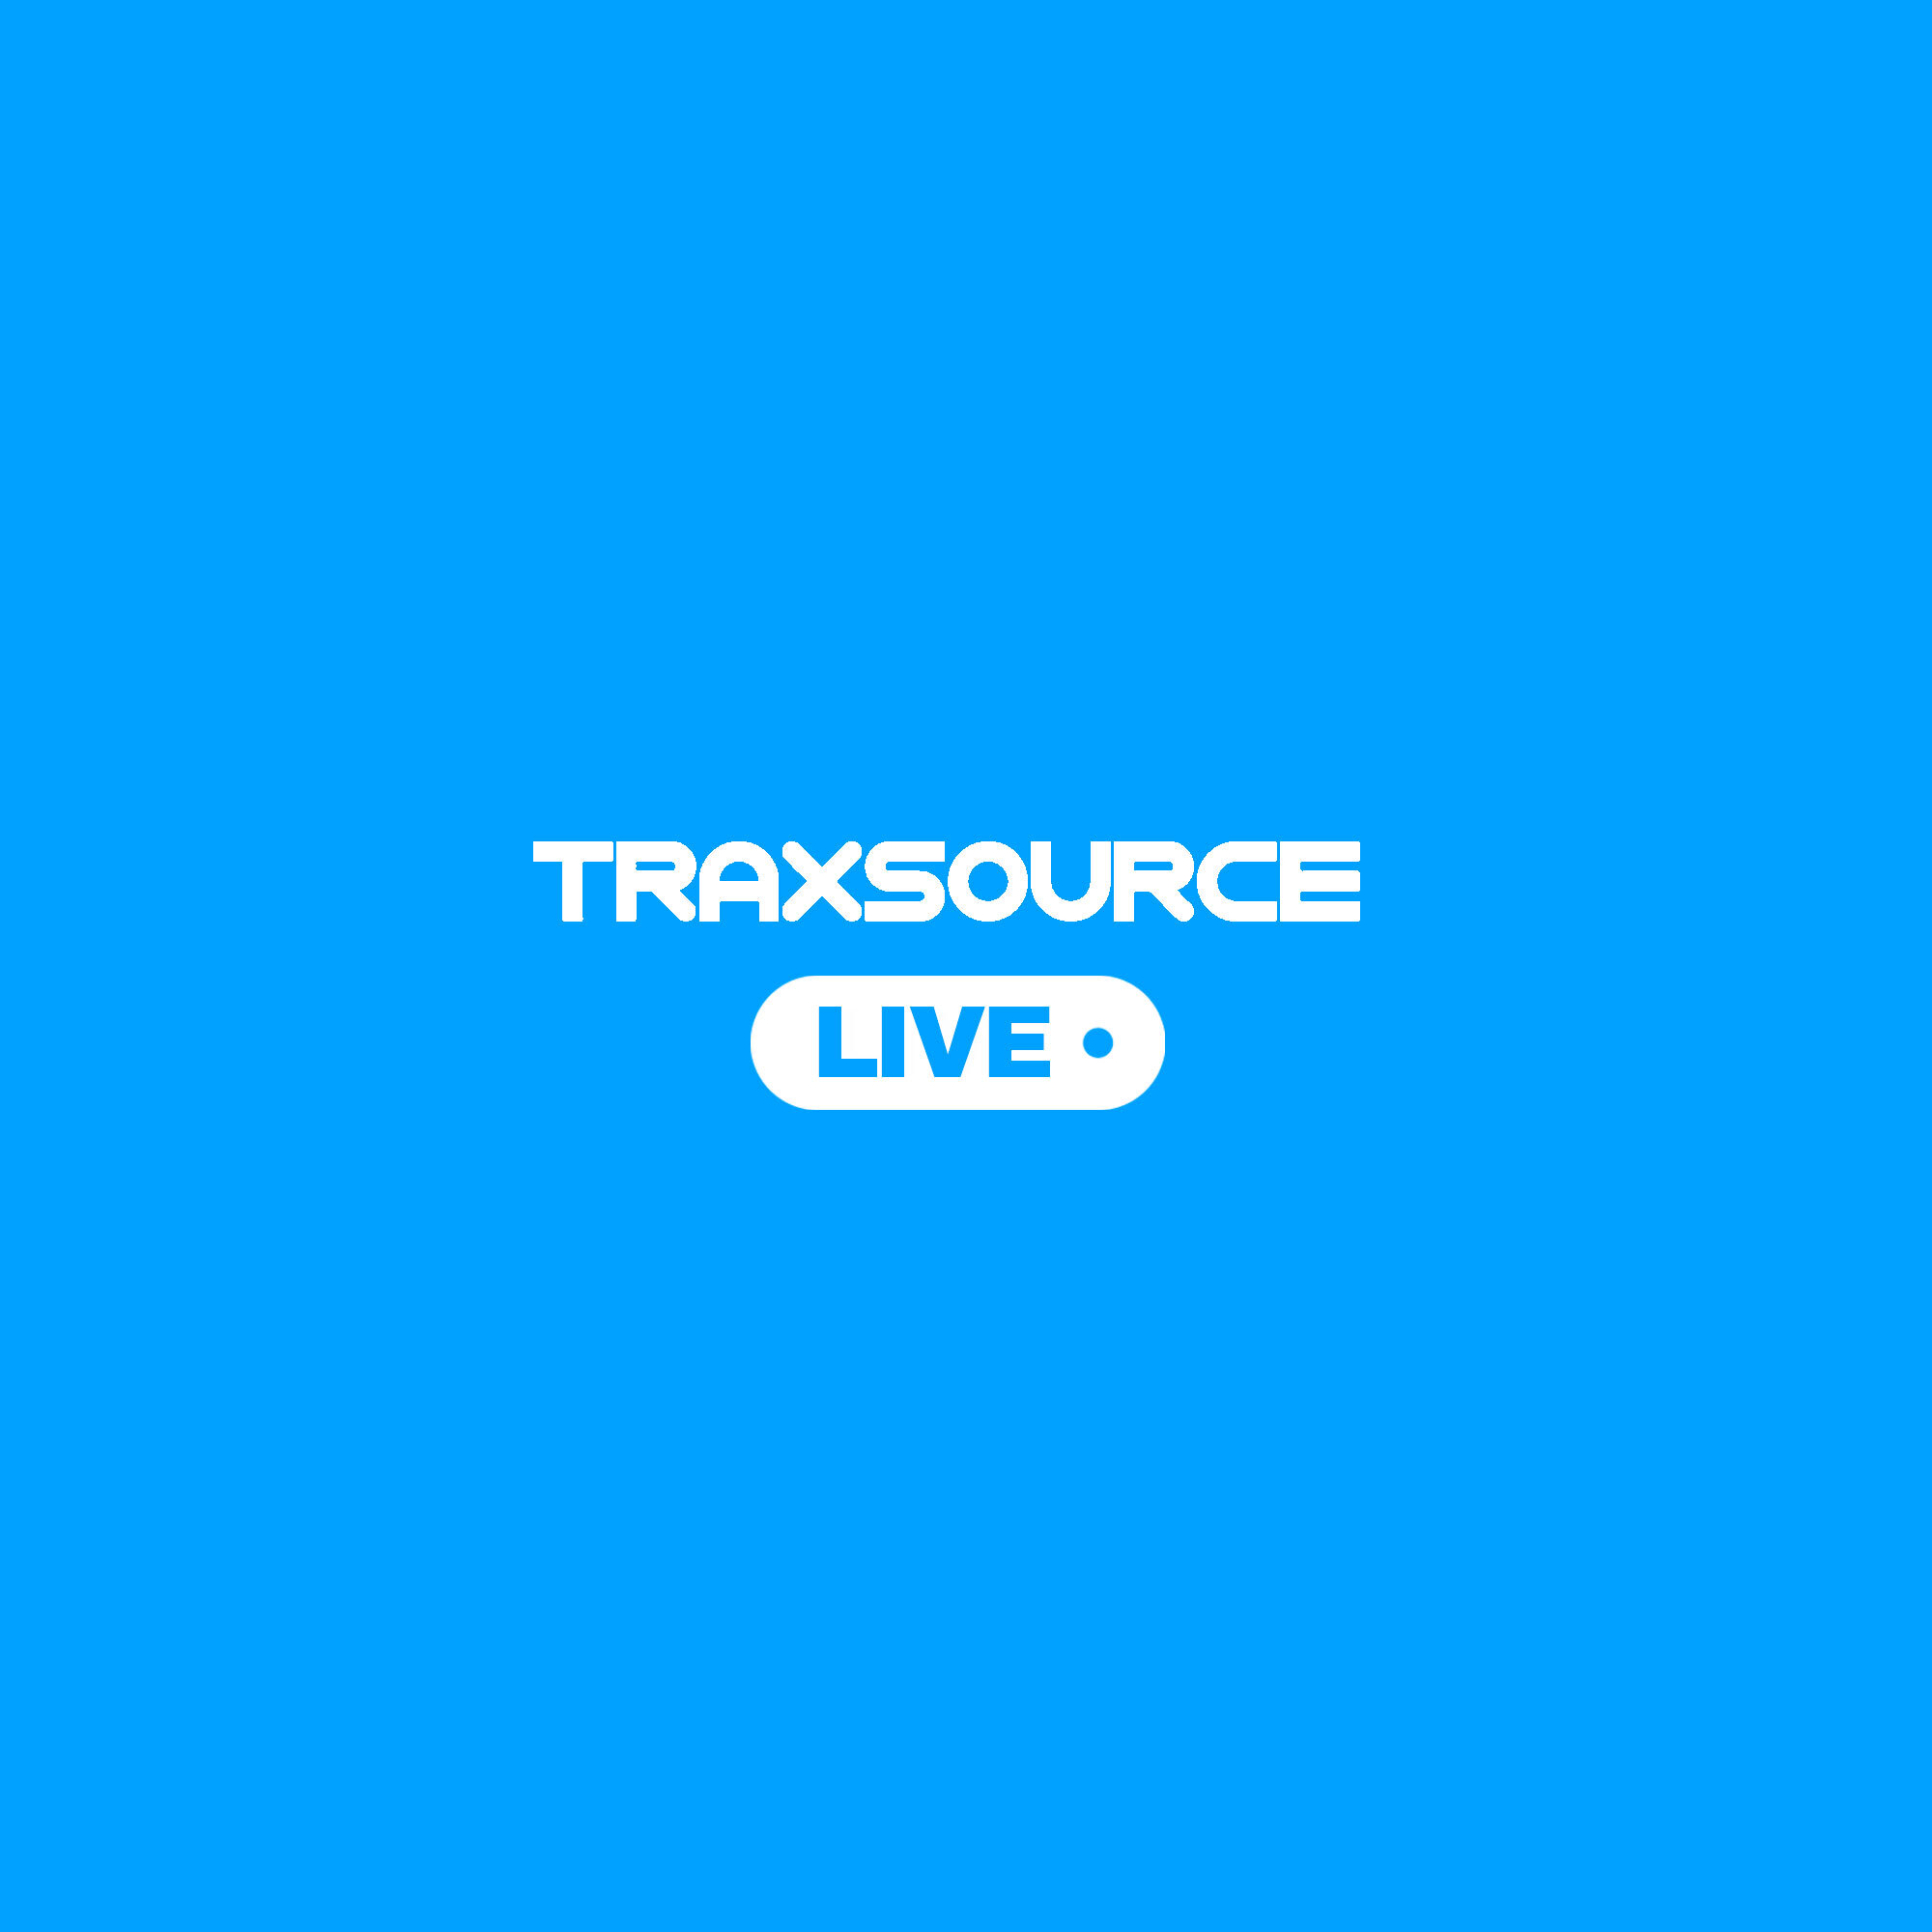 Traxsource Live